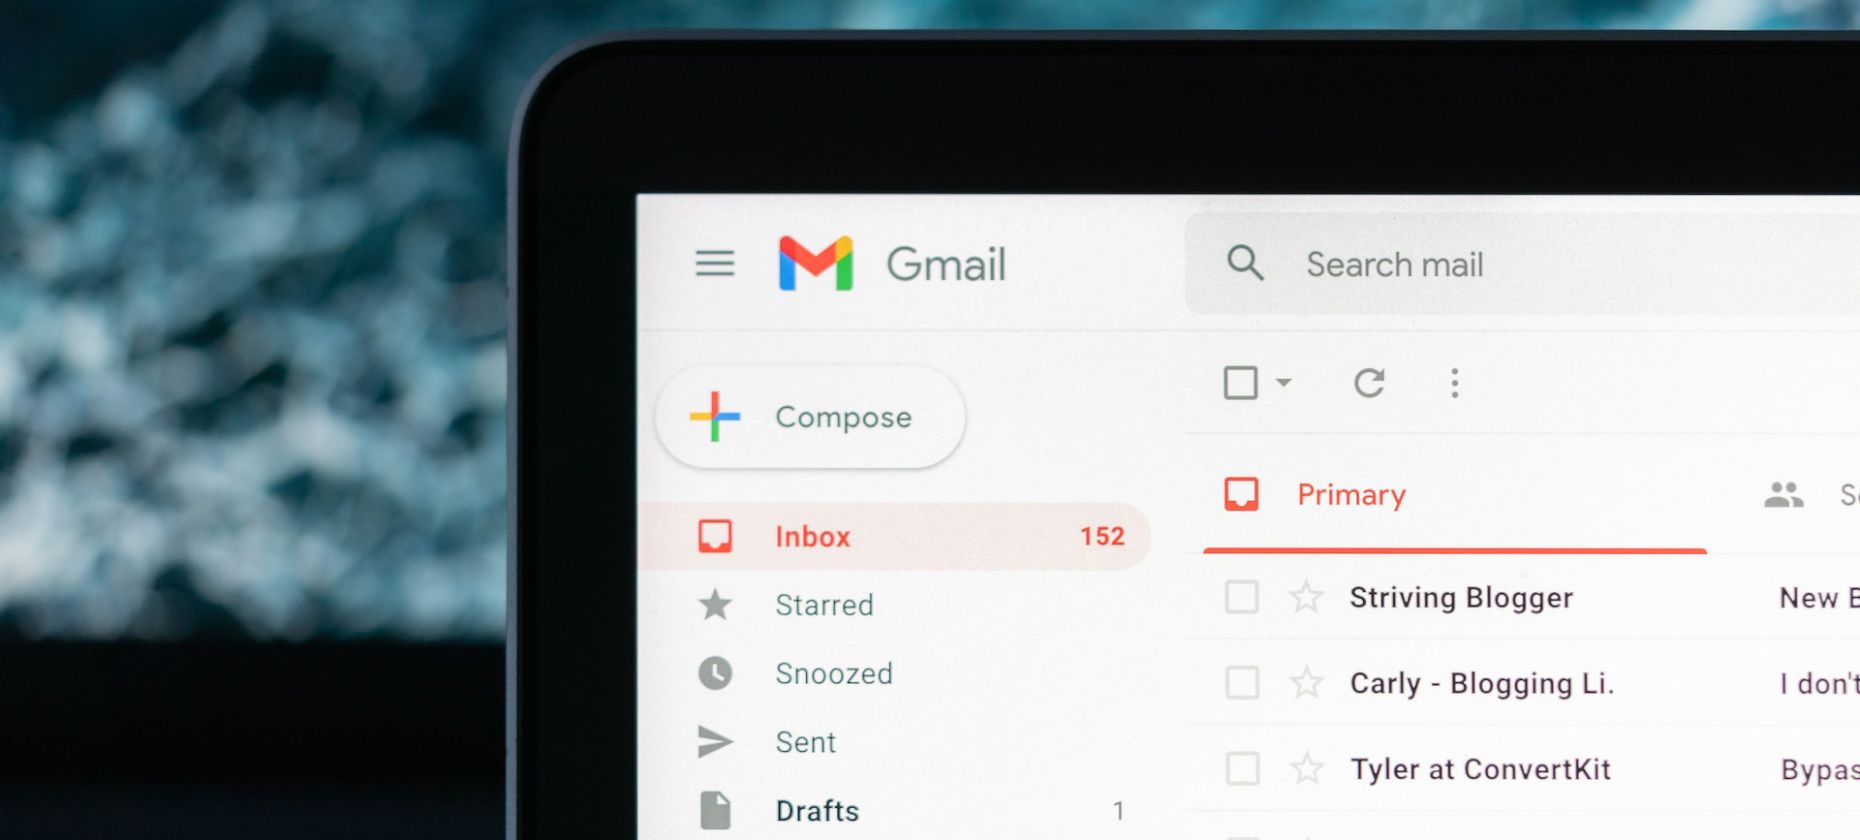 Gmail's inbox view